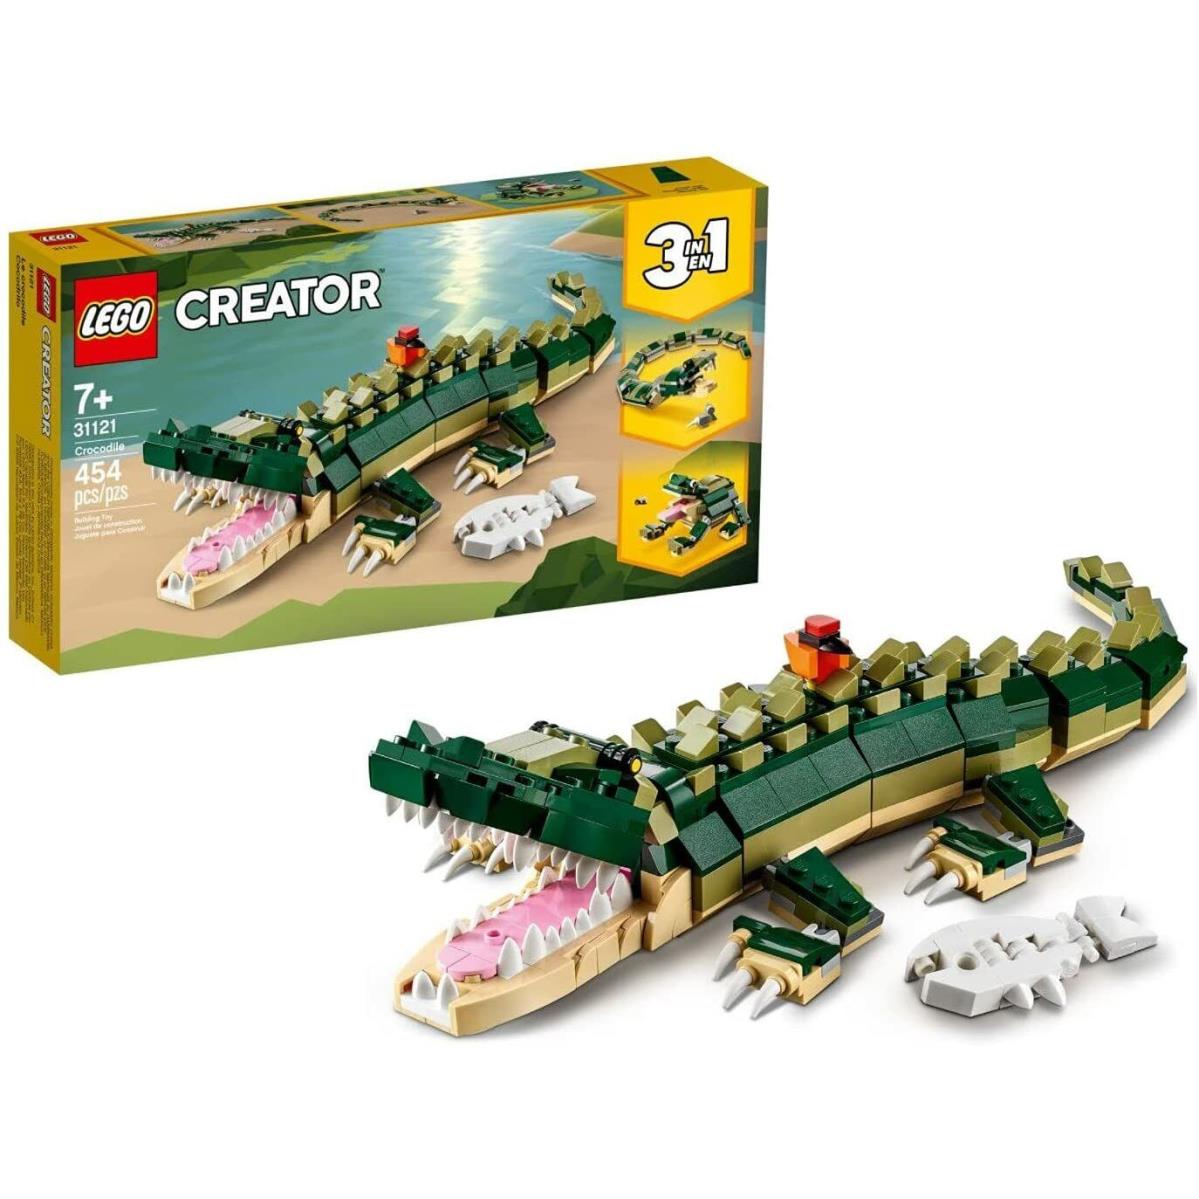 Lego Creator 3in1 Crocodile 31121 Wild Animal Playset 454 Pieces